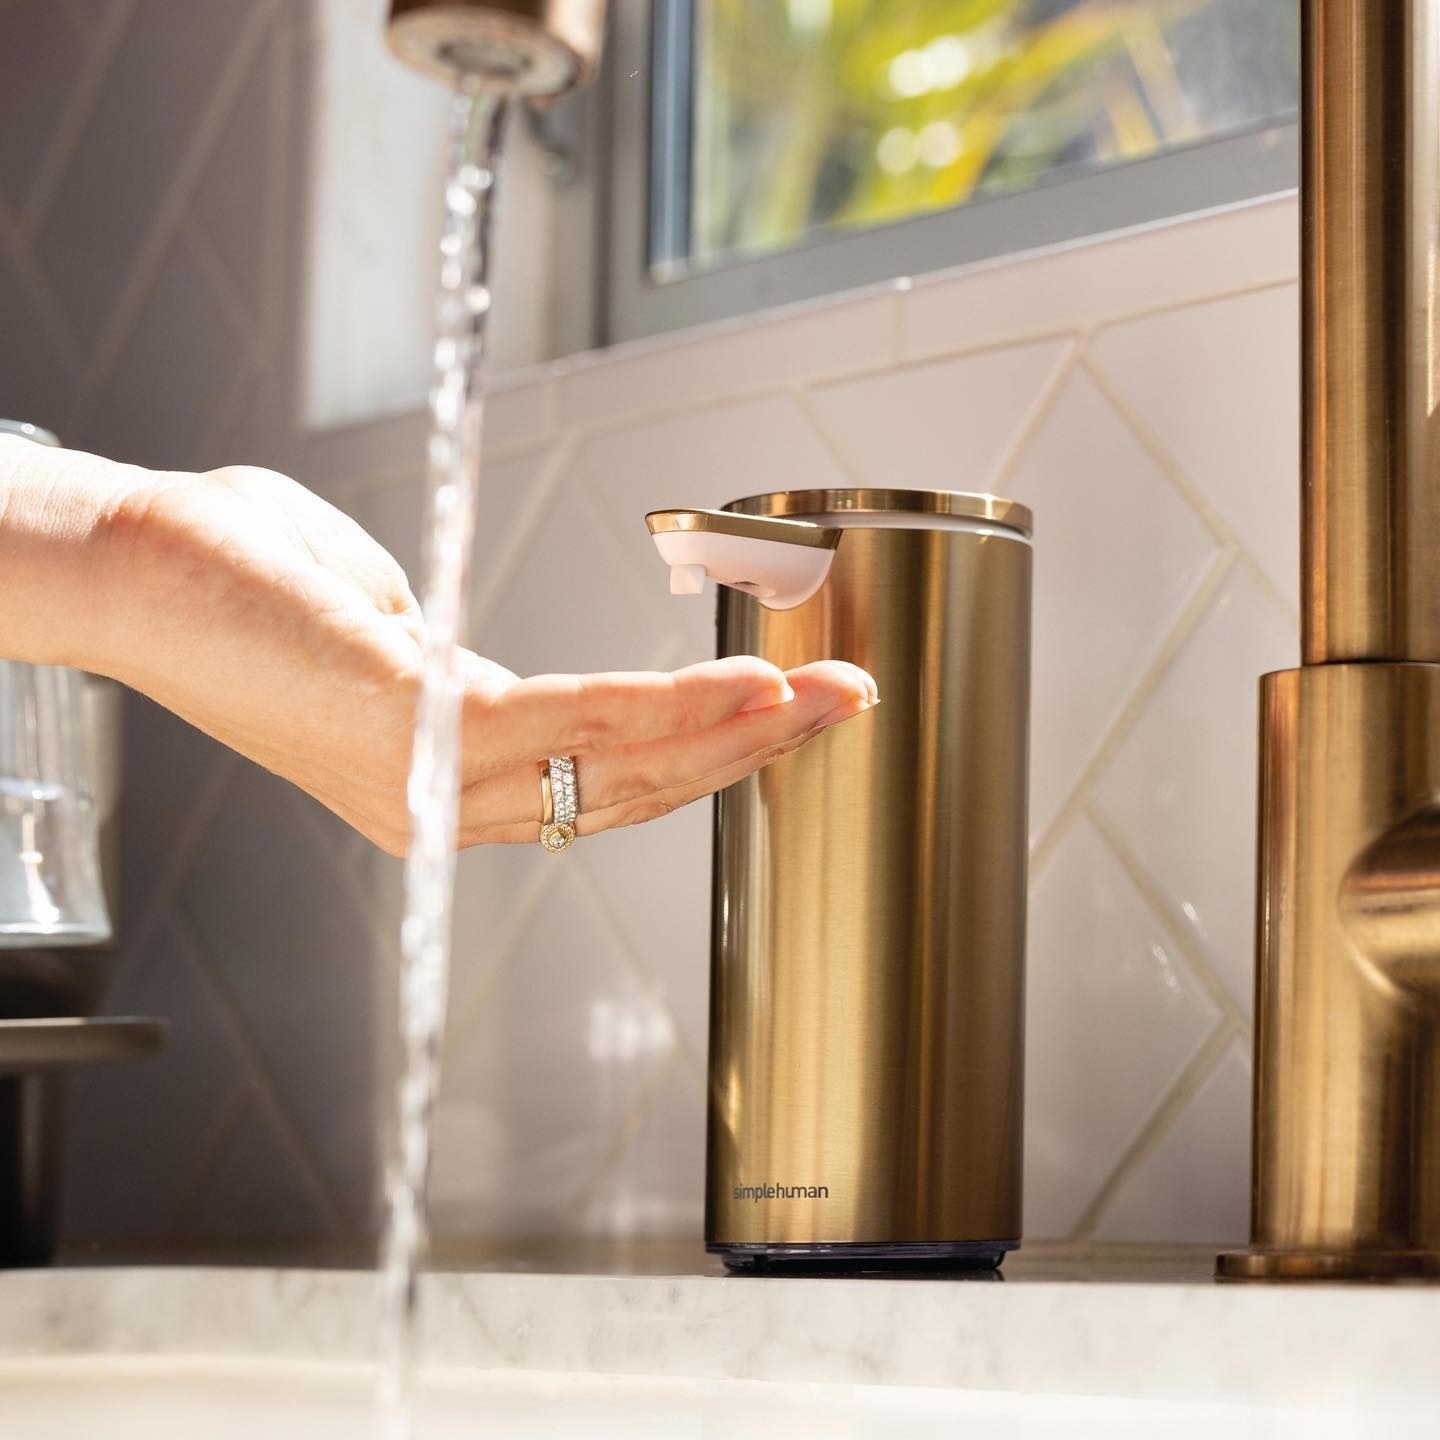 Silver automatic hand soap dispenser.